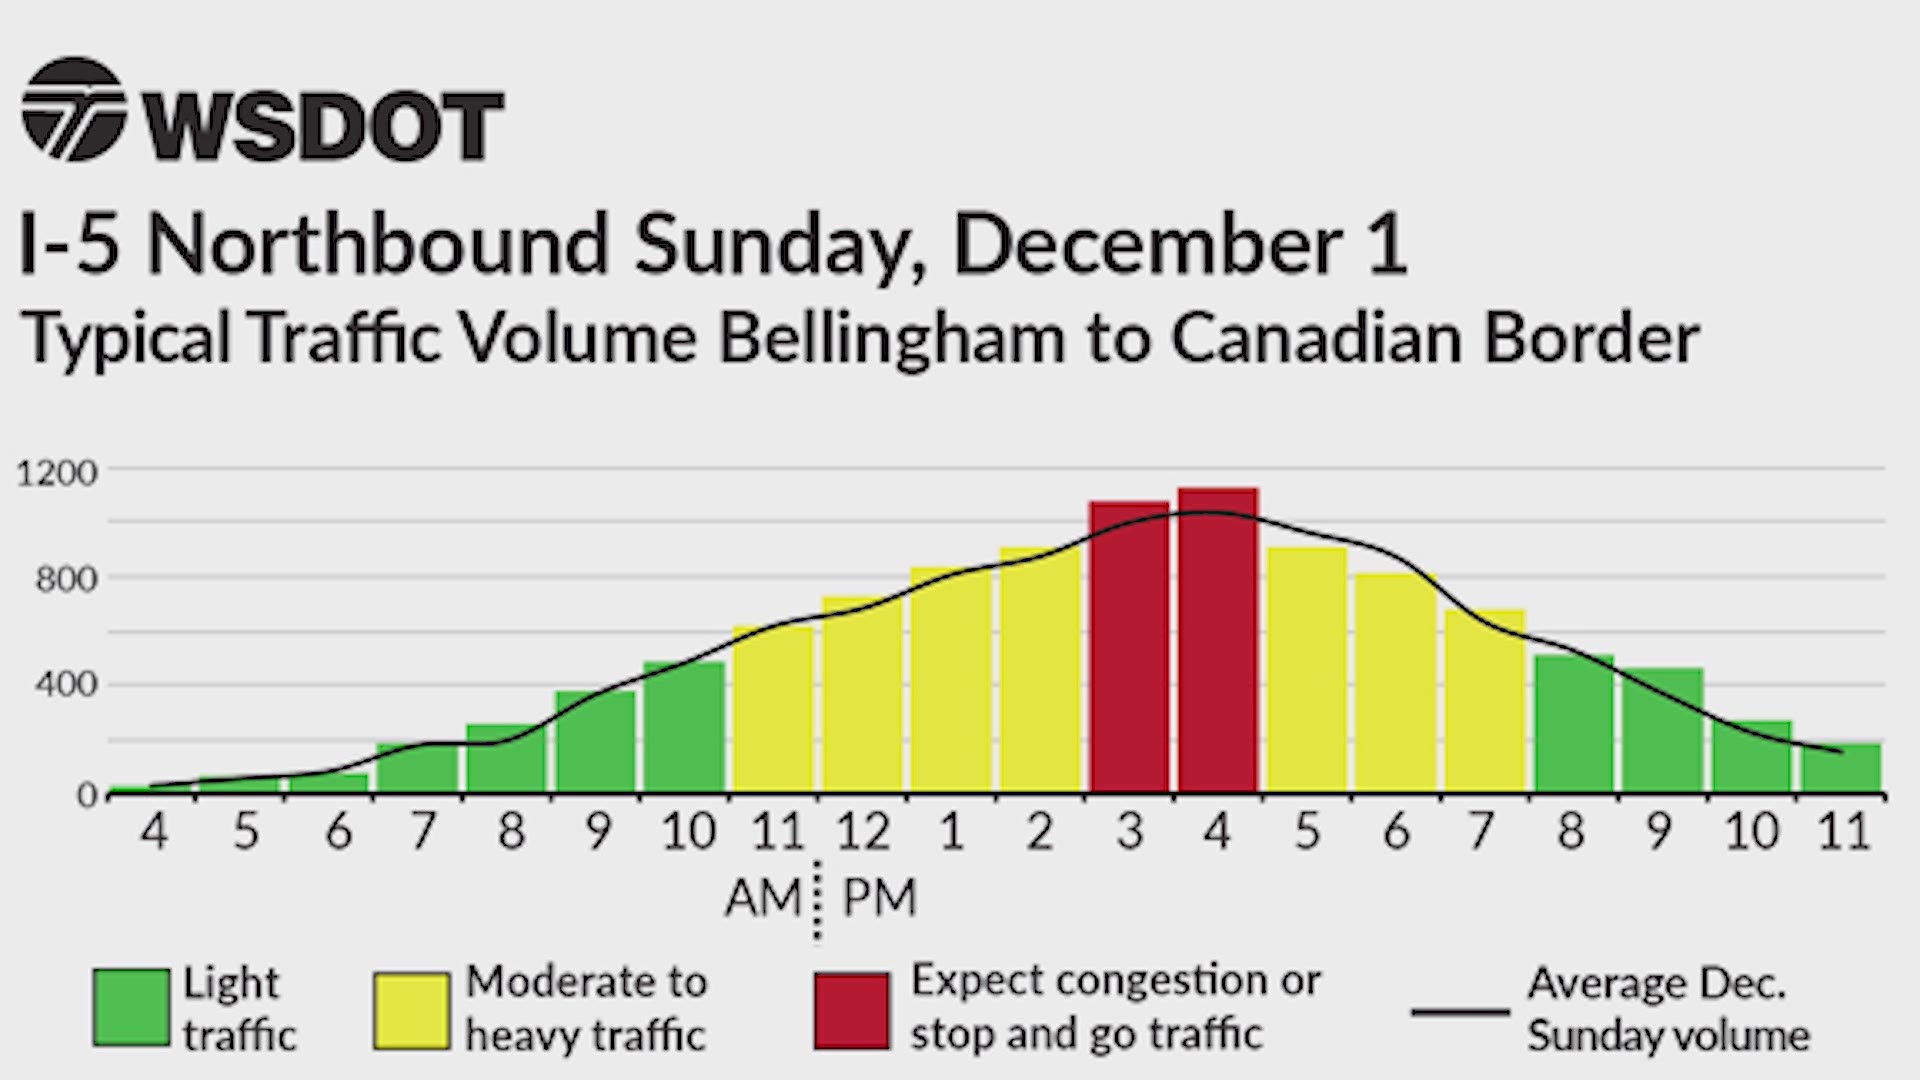 WSDOT estimated traffic volumes for Sunday, December 1st